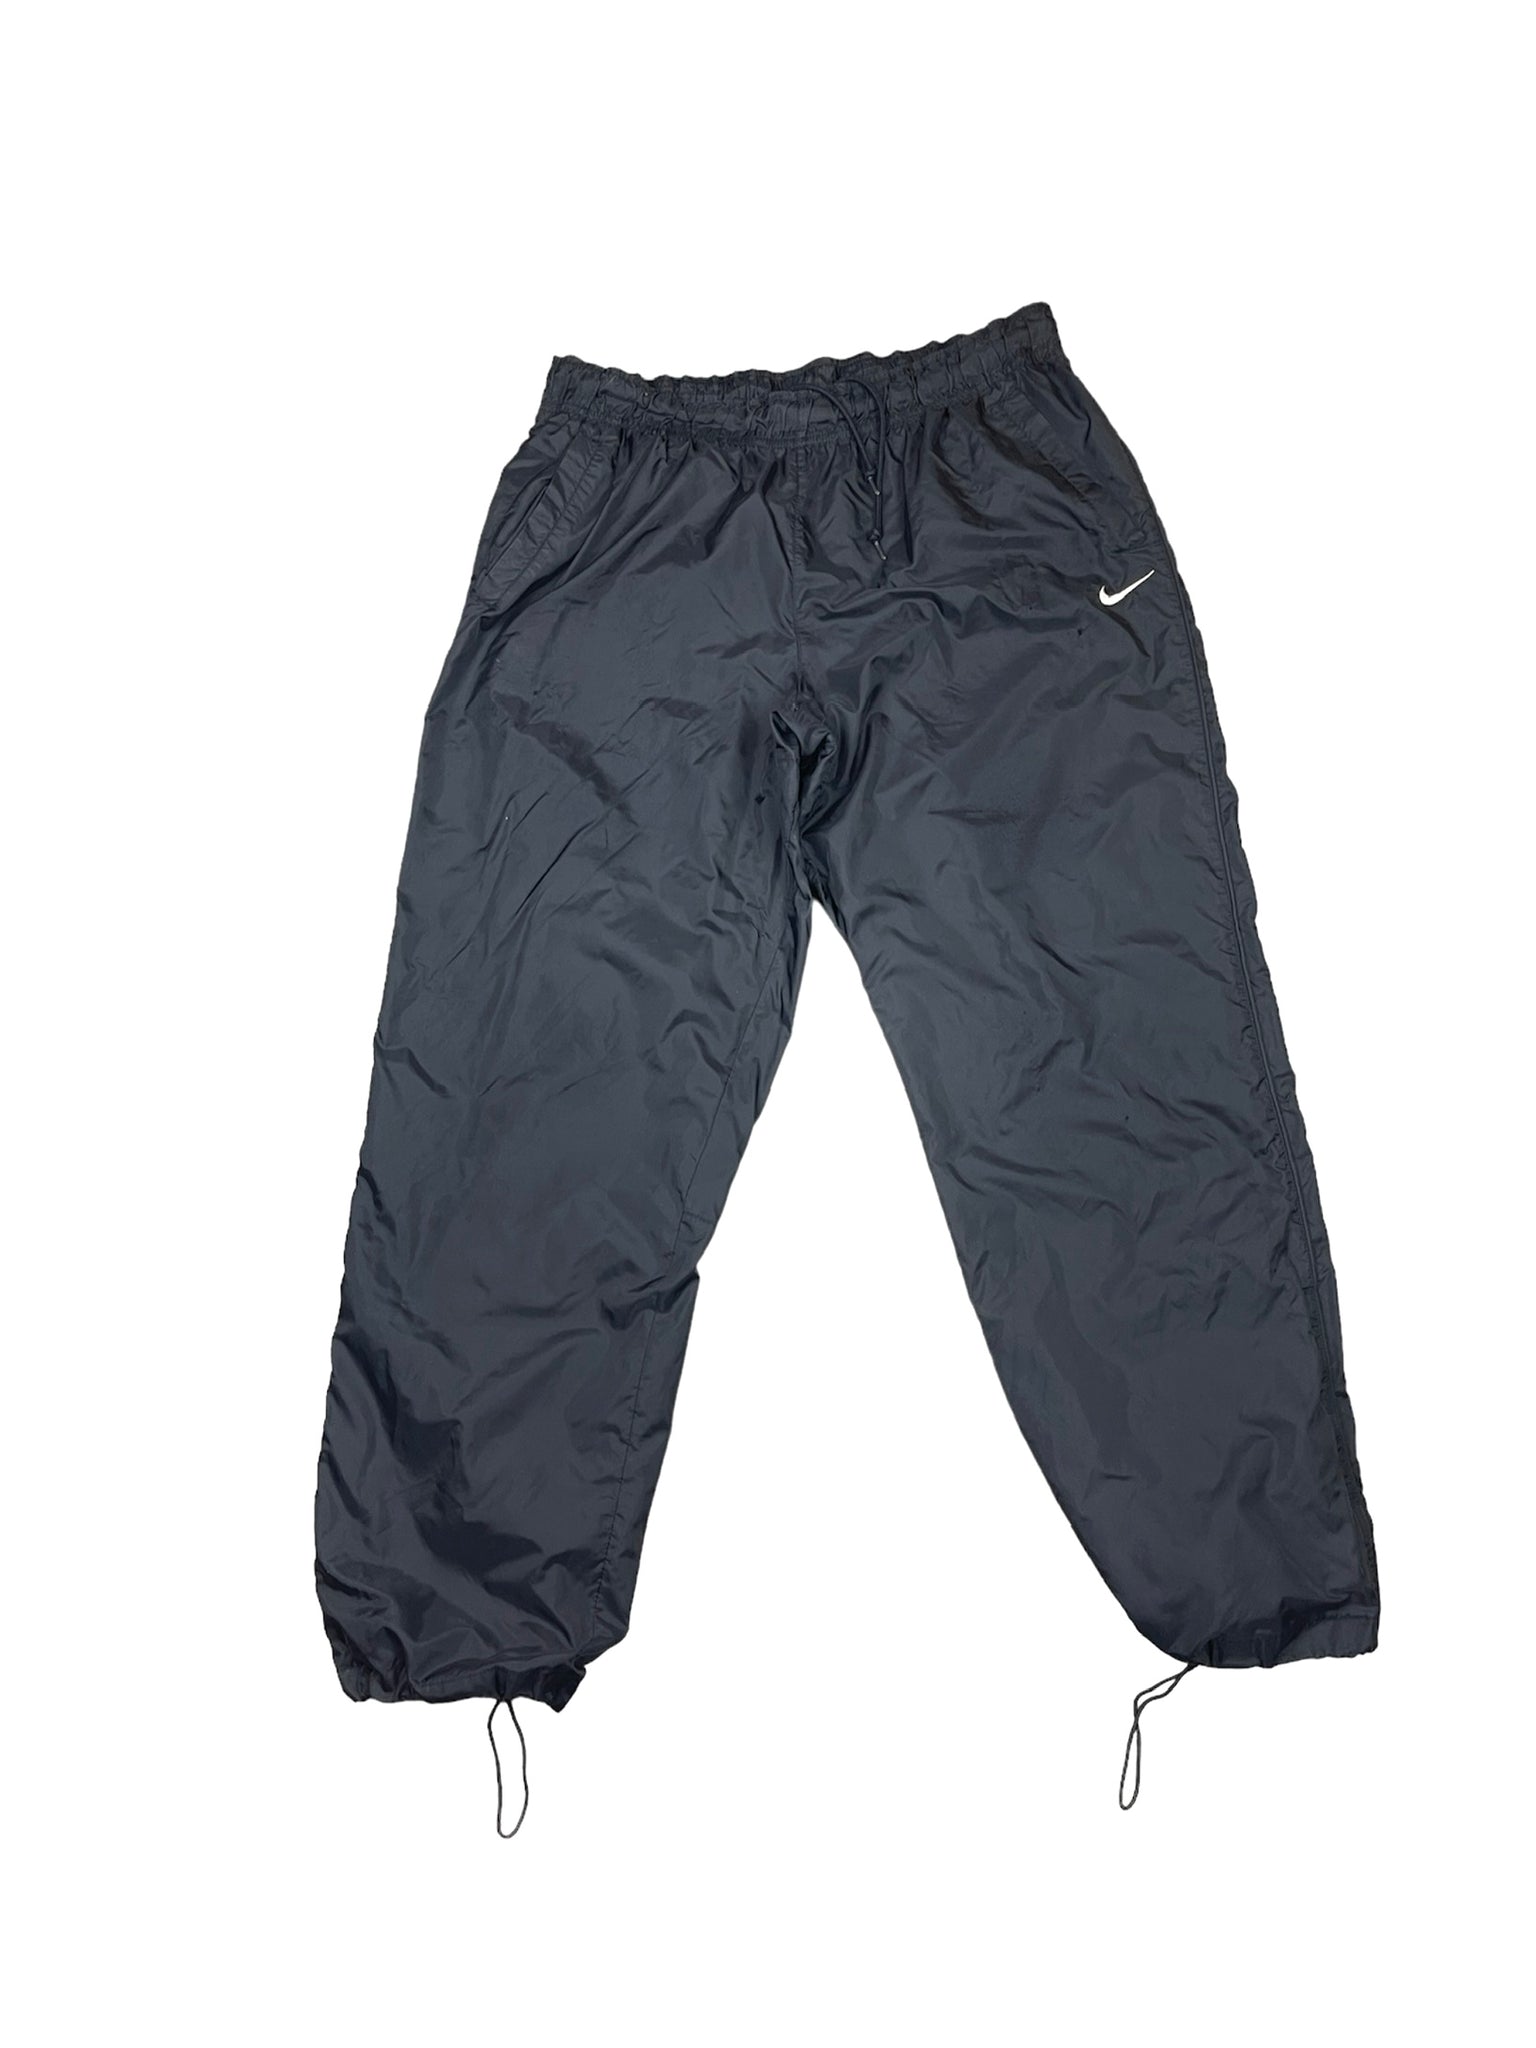 Nike 💸BINDINGOFFER💸Vintage Nike parachute pants